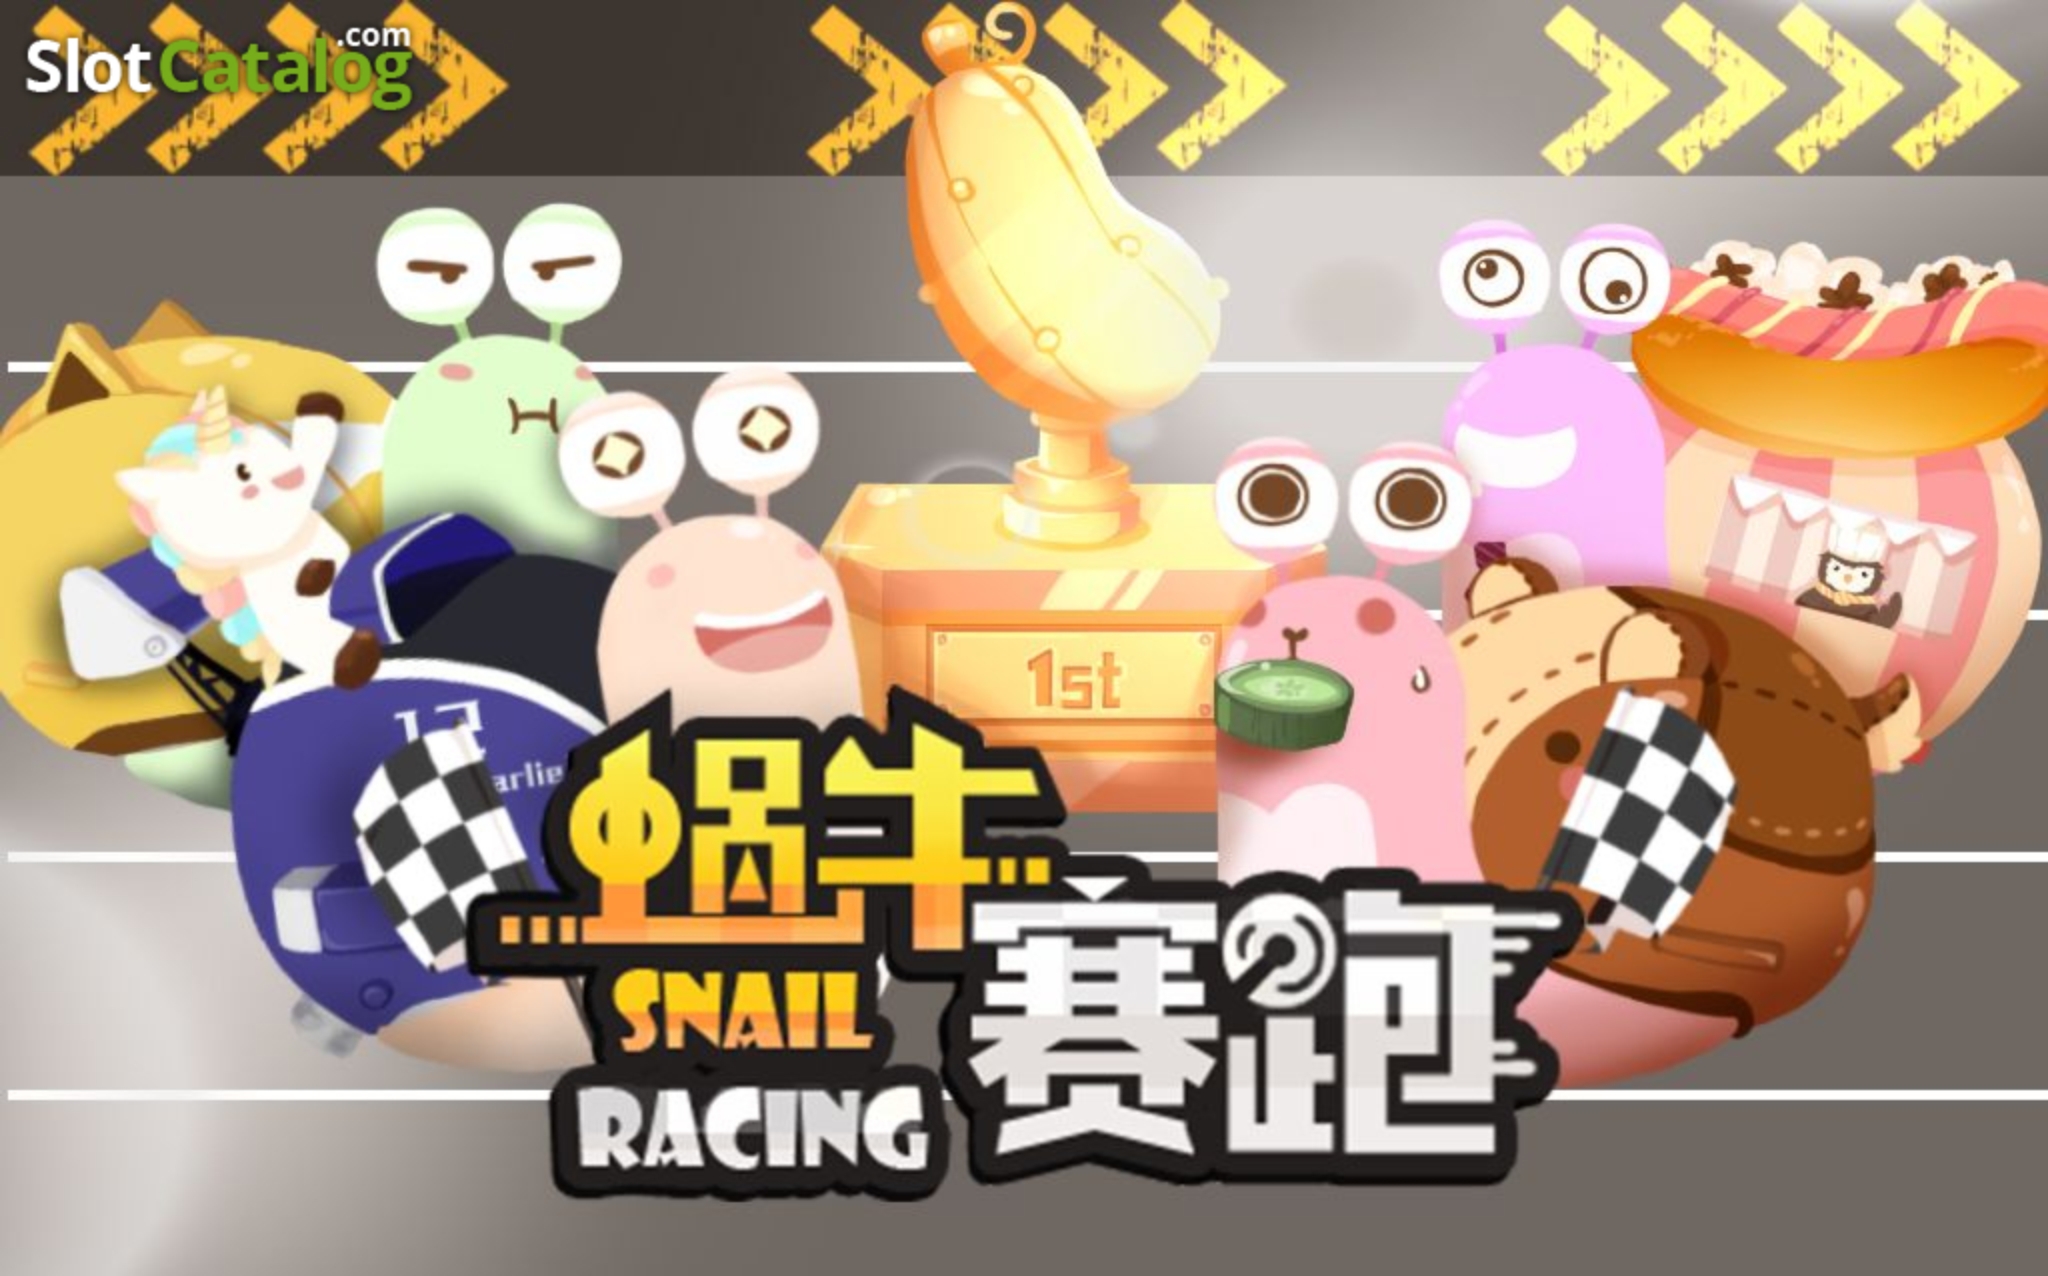 Snail Racing demo